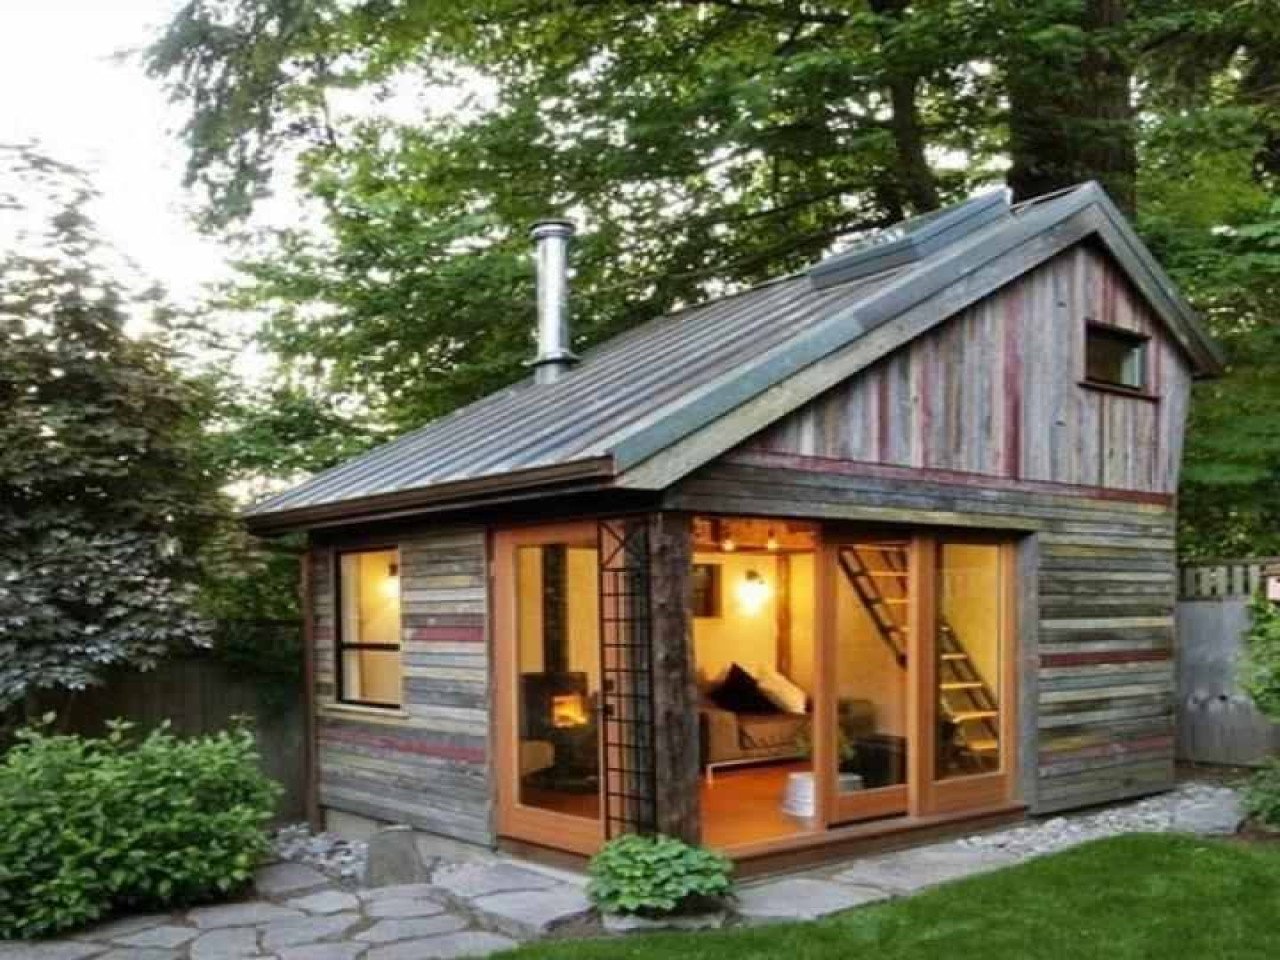 Best ideas about Prefab Backyard Guest House
. Save or Pin Back Yard Guest House Prefab Backyard Cottage saltbox Now.